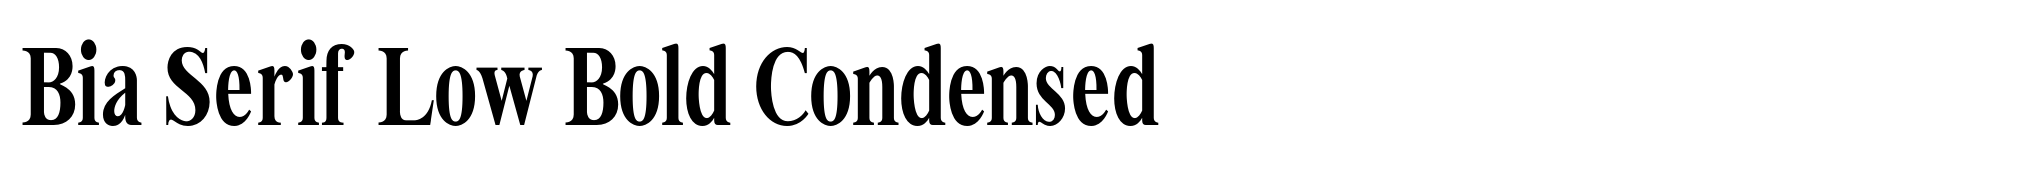 Bia Serif Low Bold Condensed image